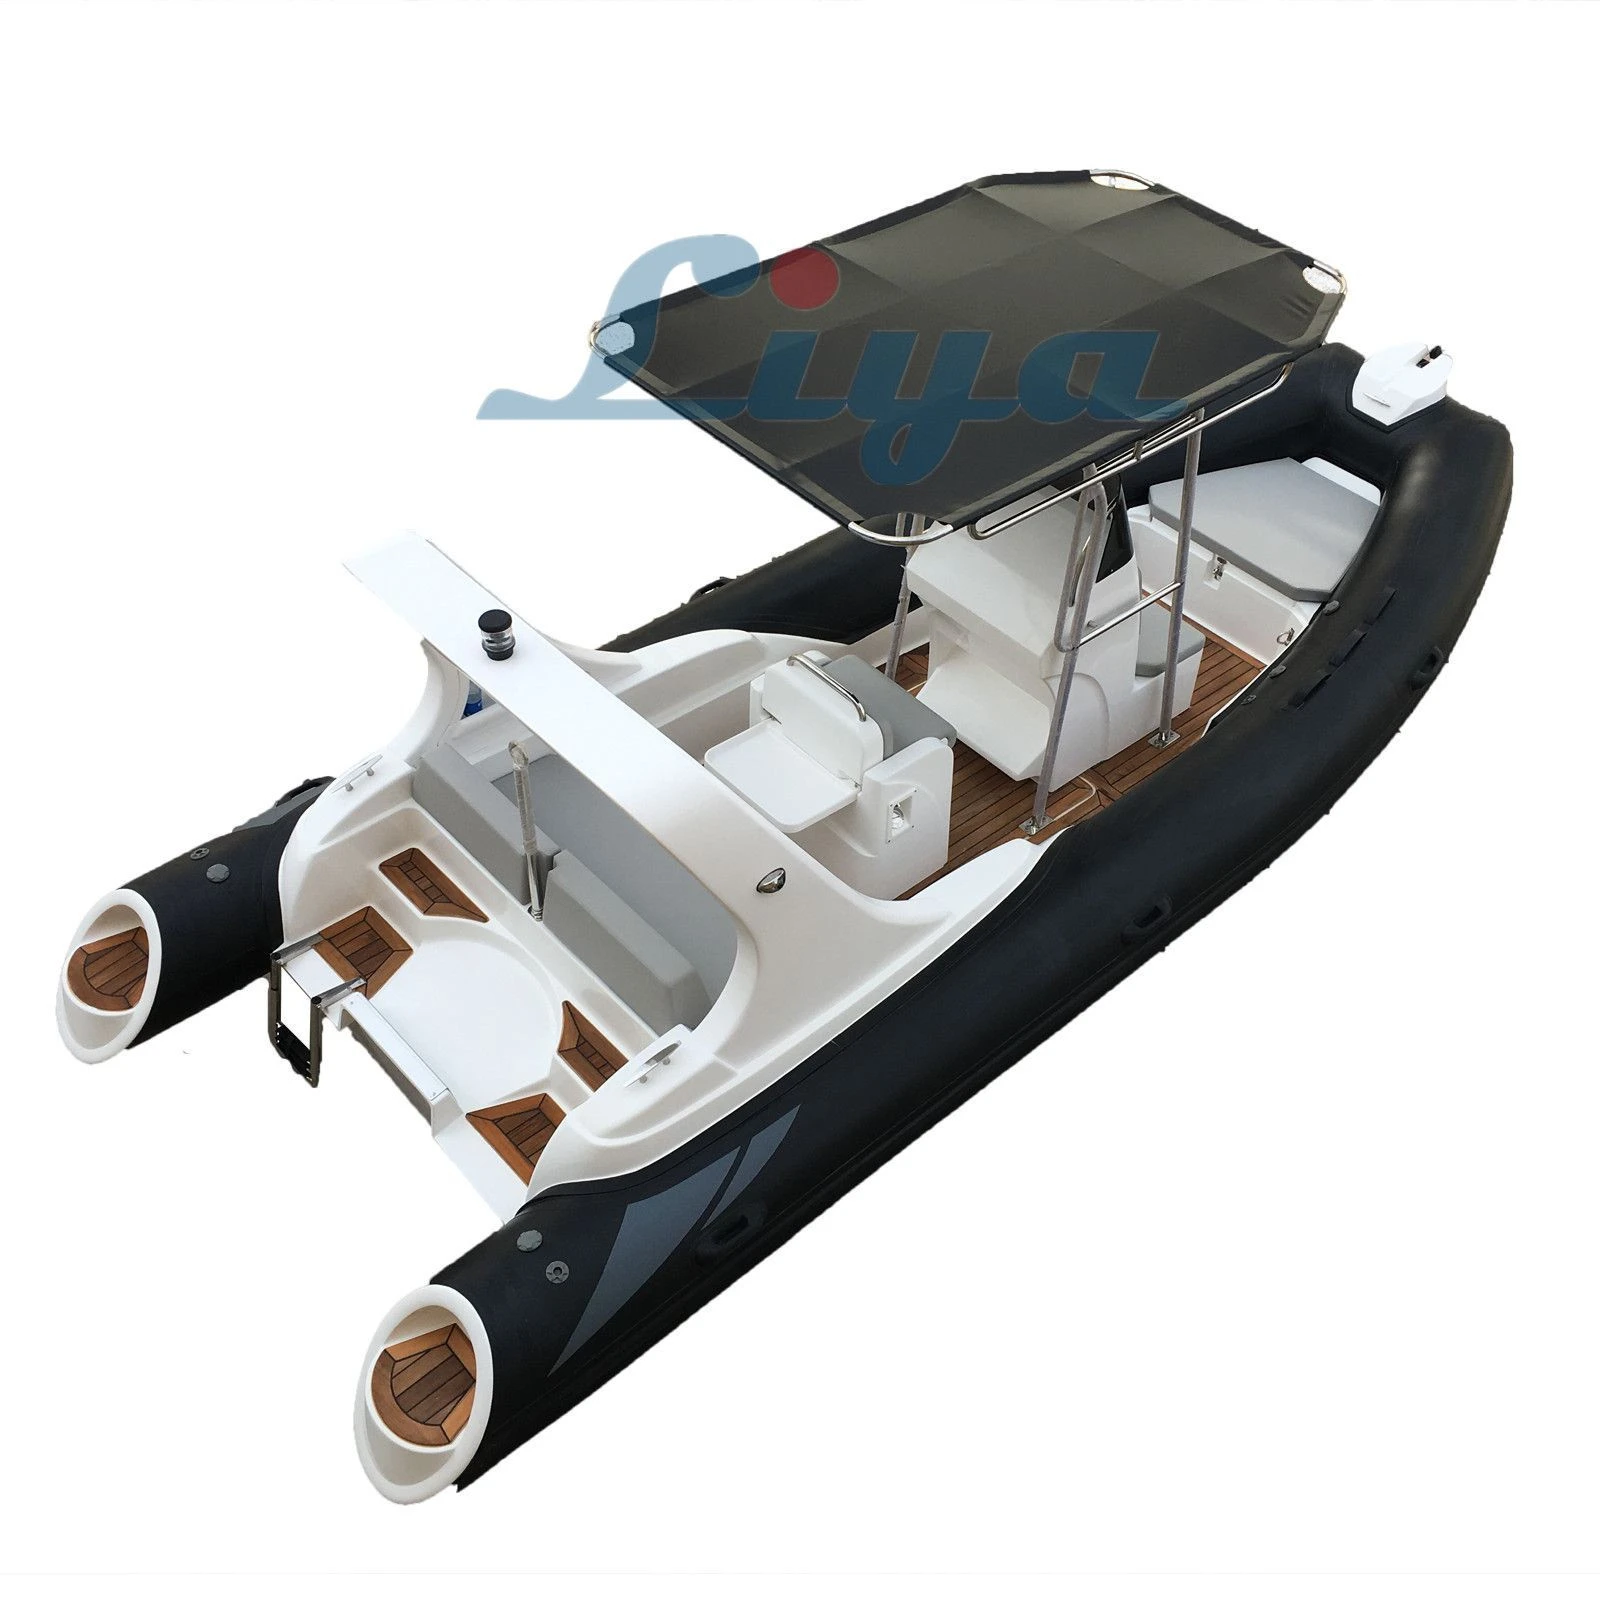 19FT 5.8m Inflatable Rib Boat Sport Boat Fishing Boat Rib580b PVC